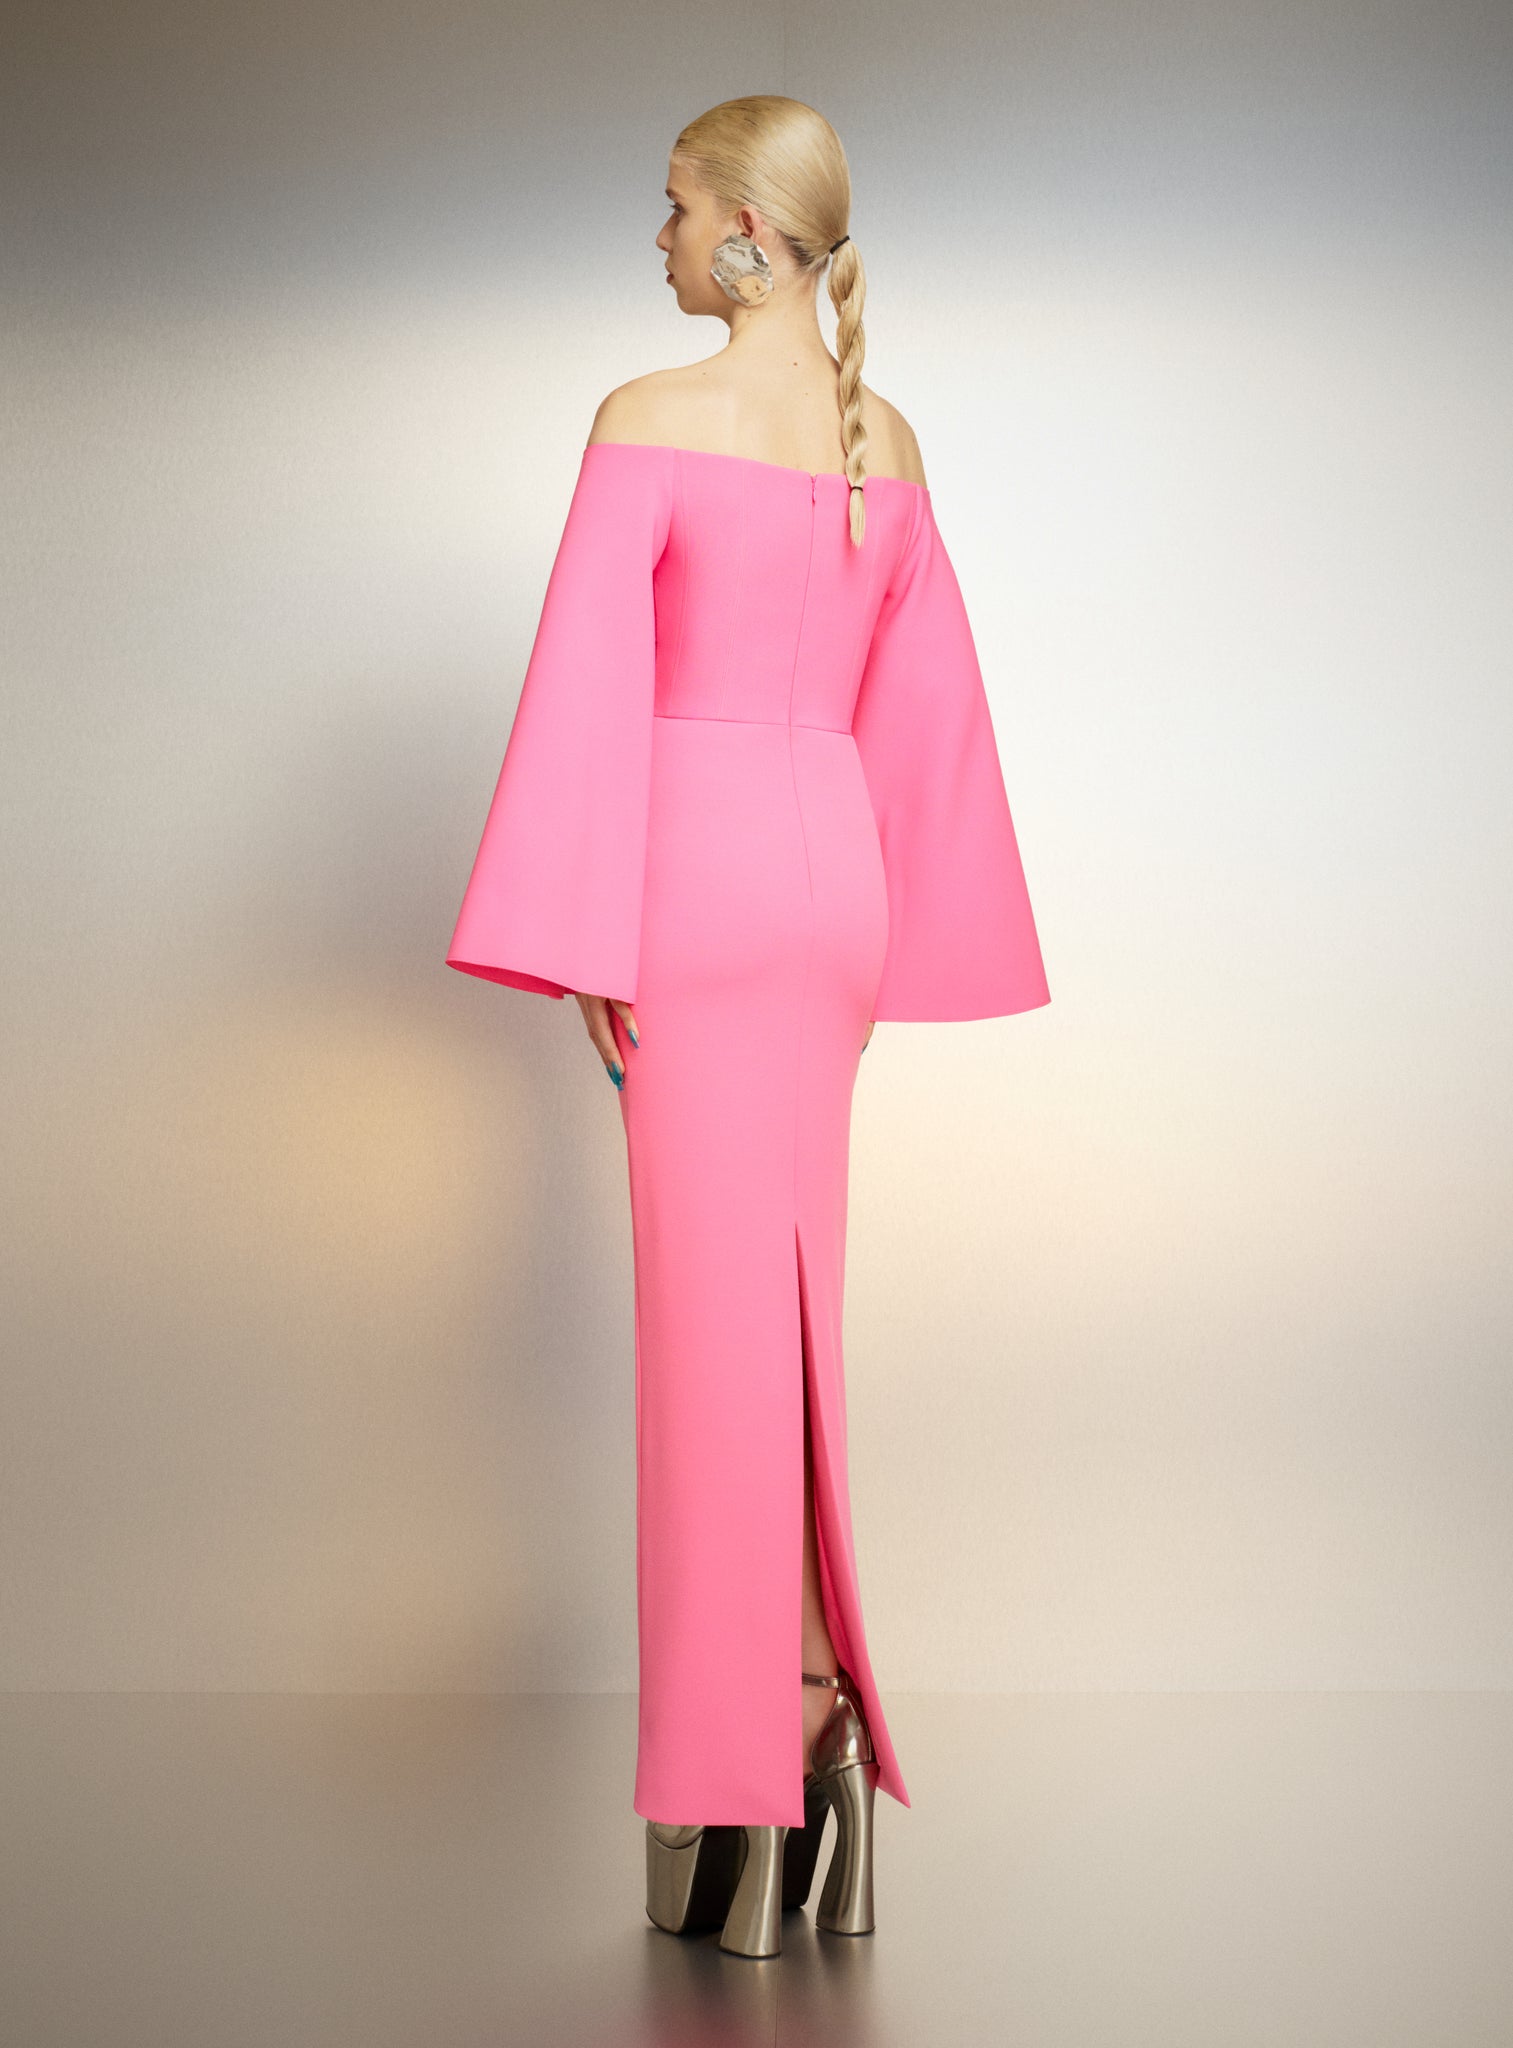 The Eliana Maxi Dress in Pink